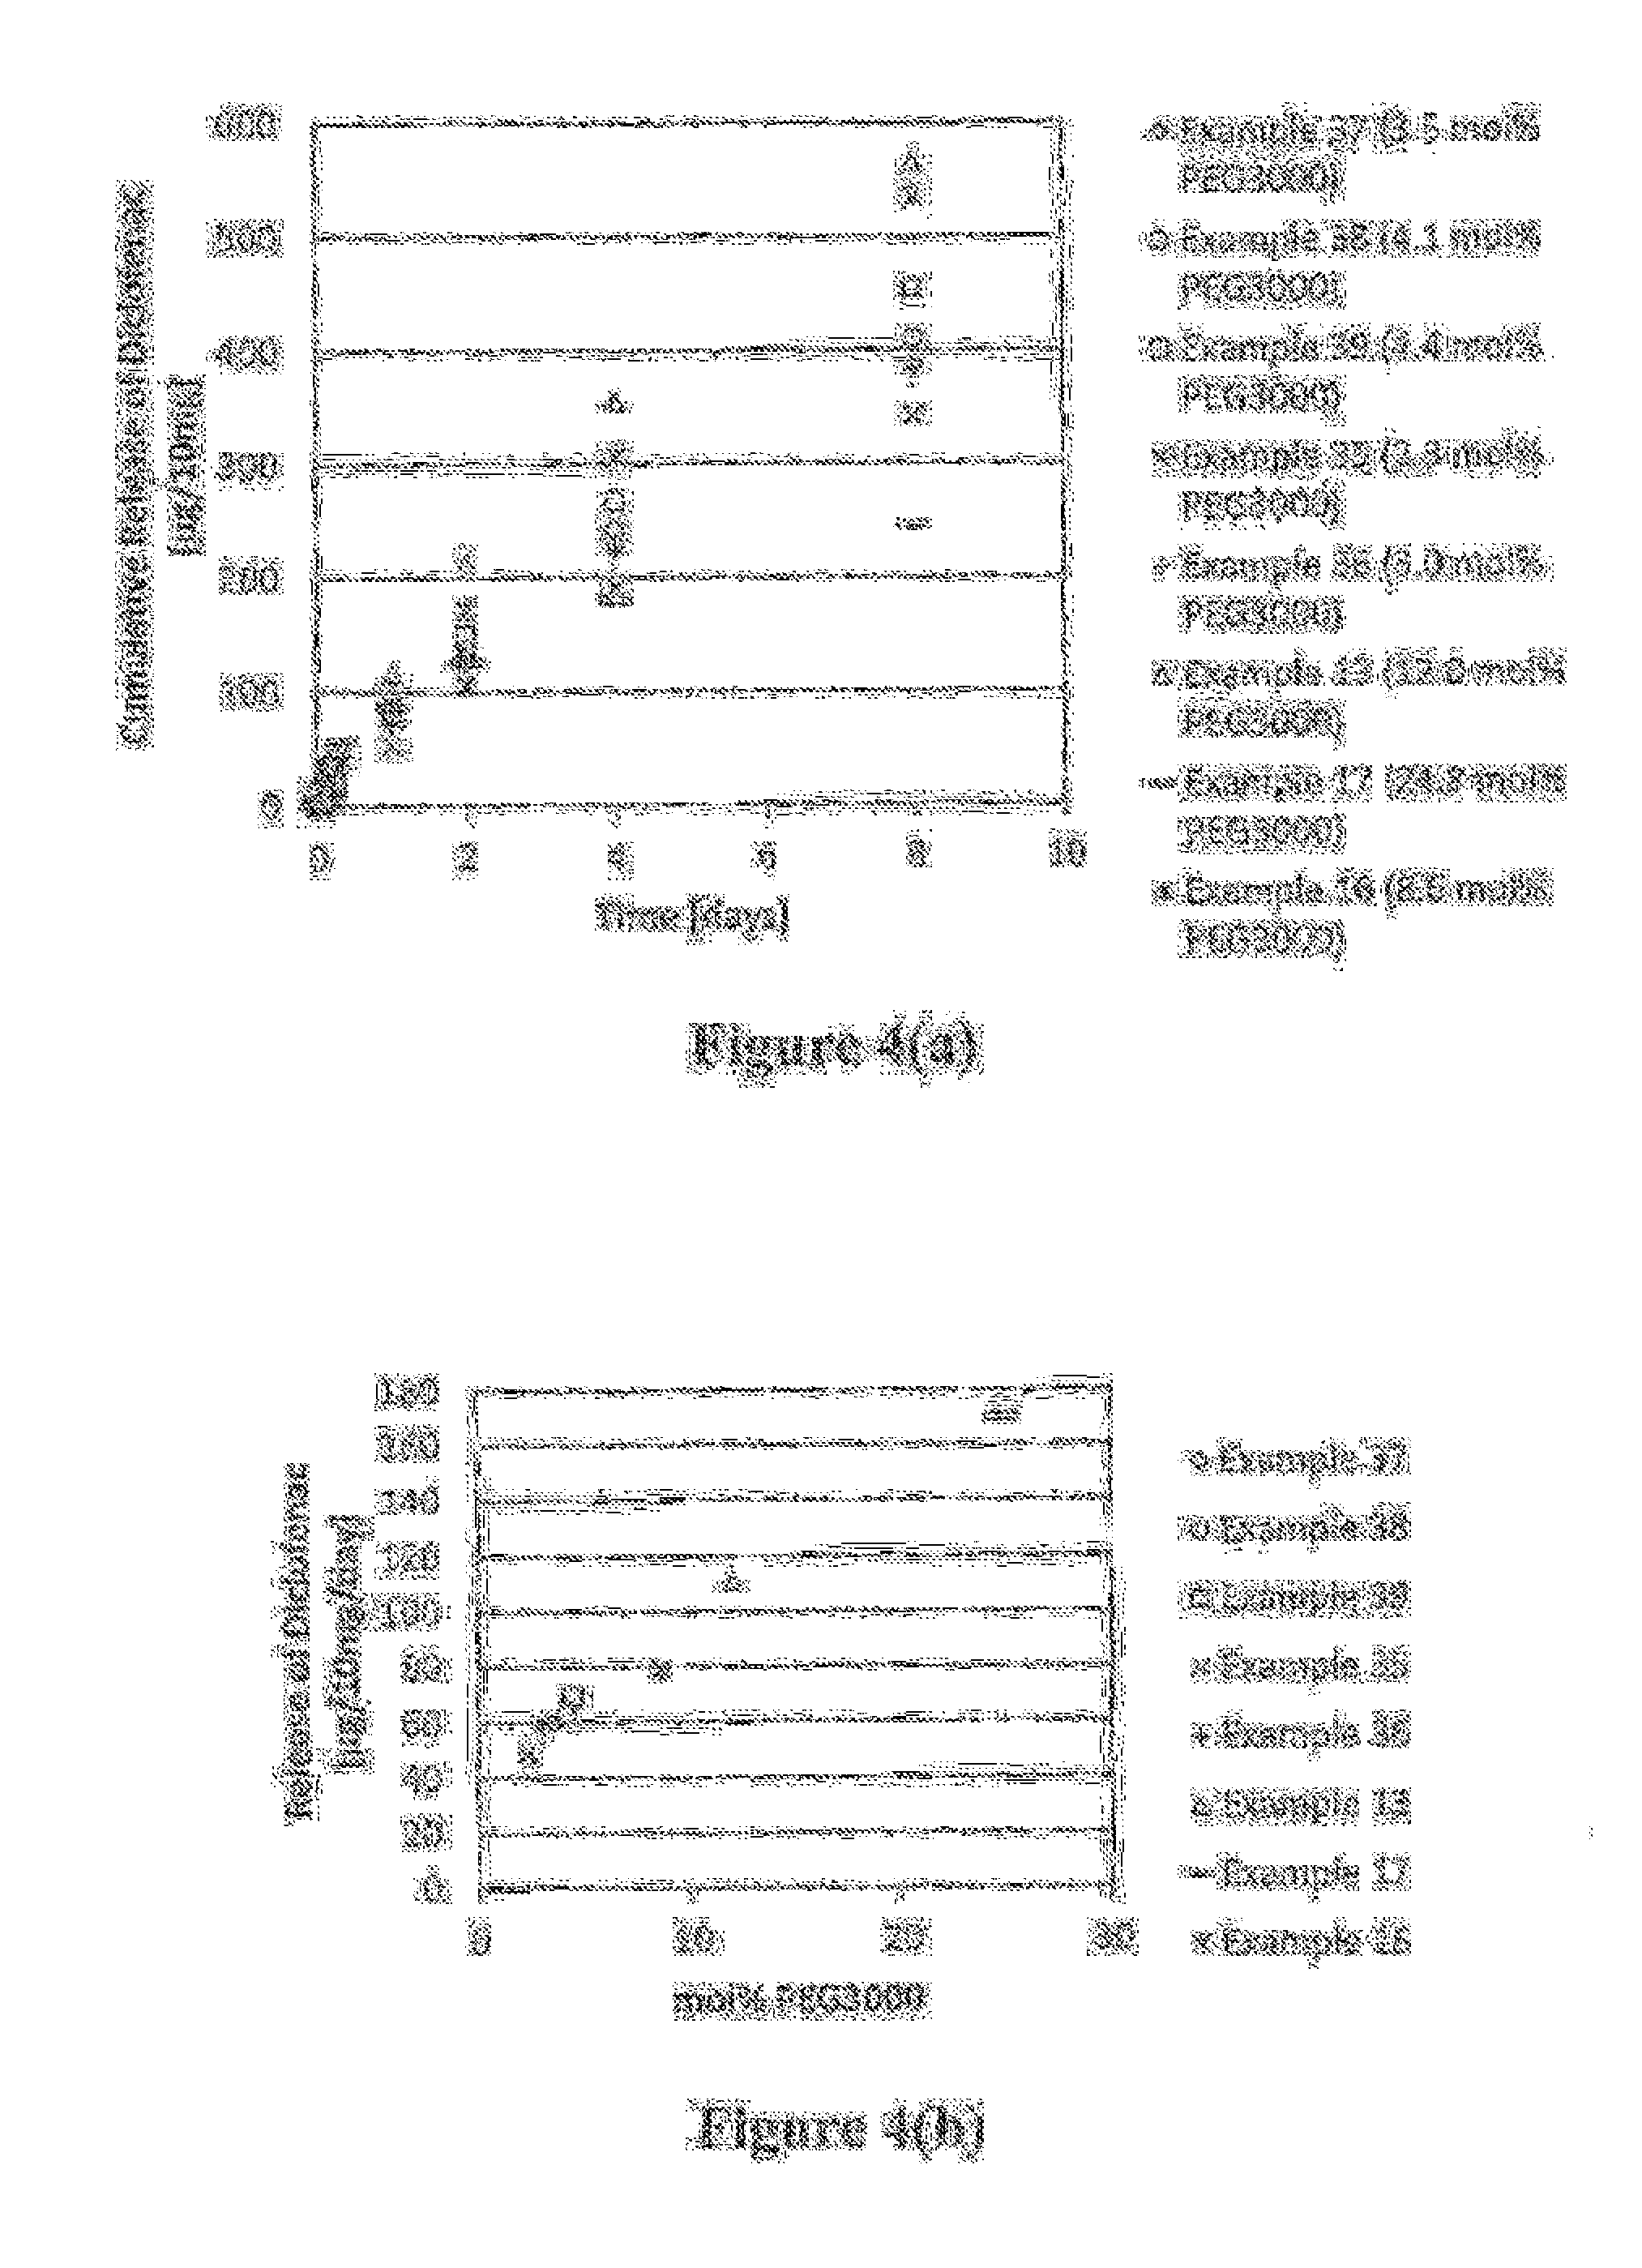 Polymer-nsaid conjugate